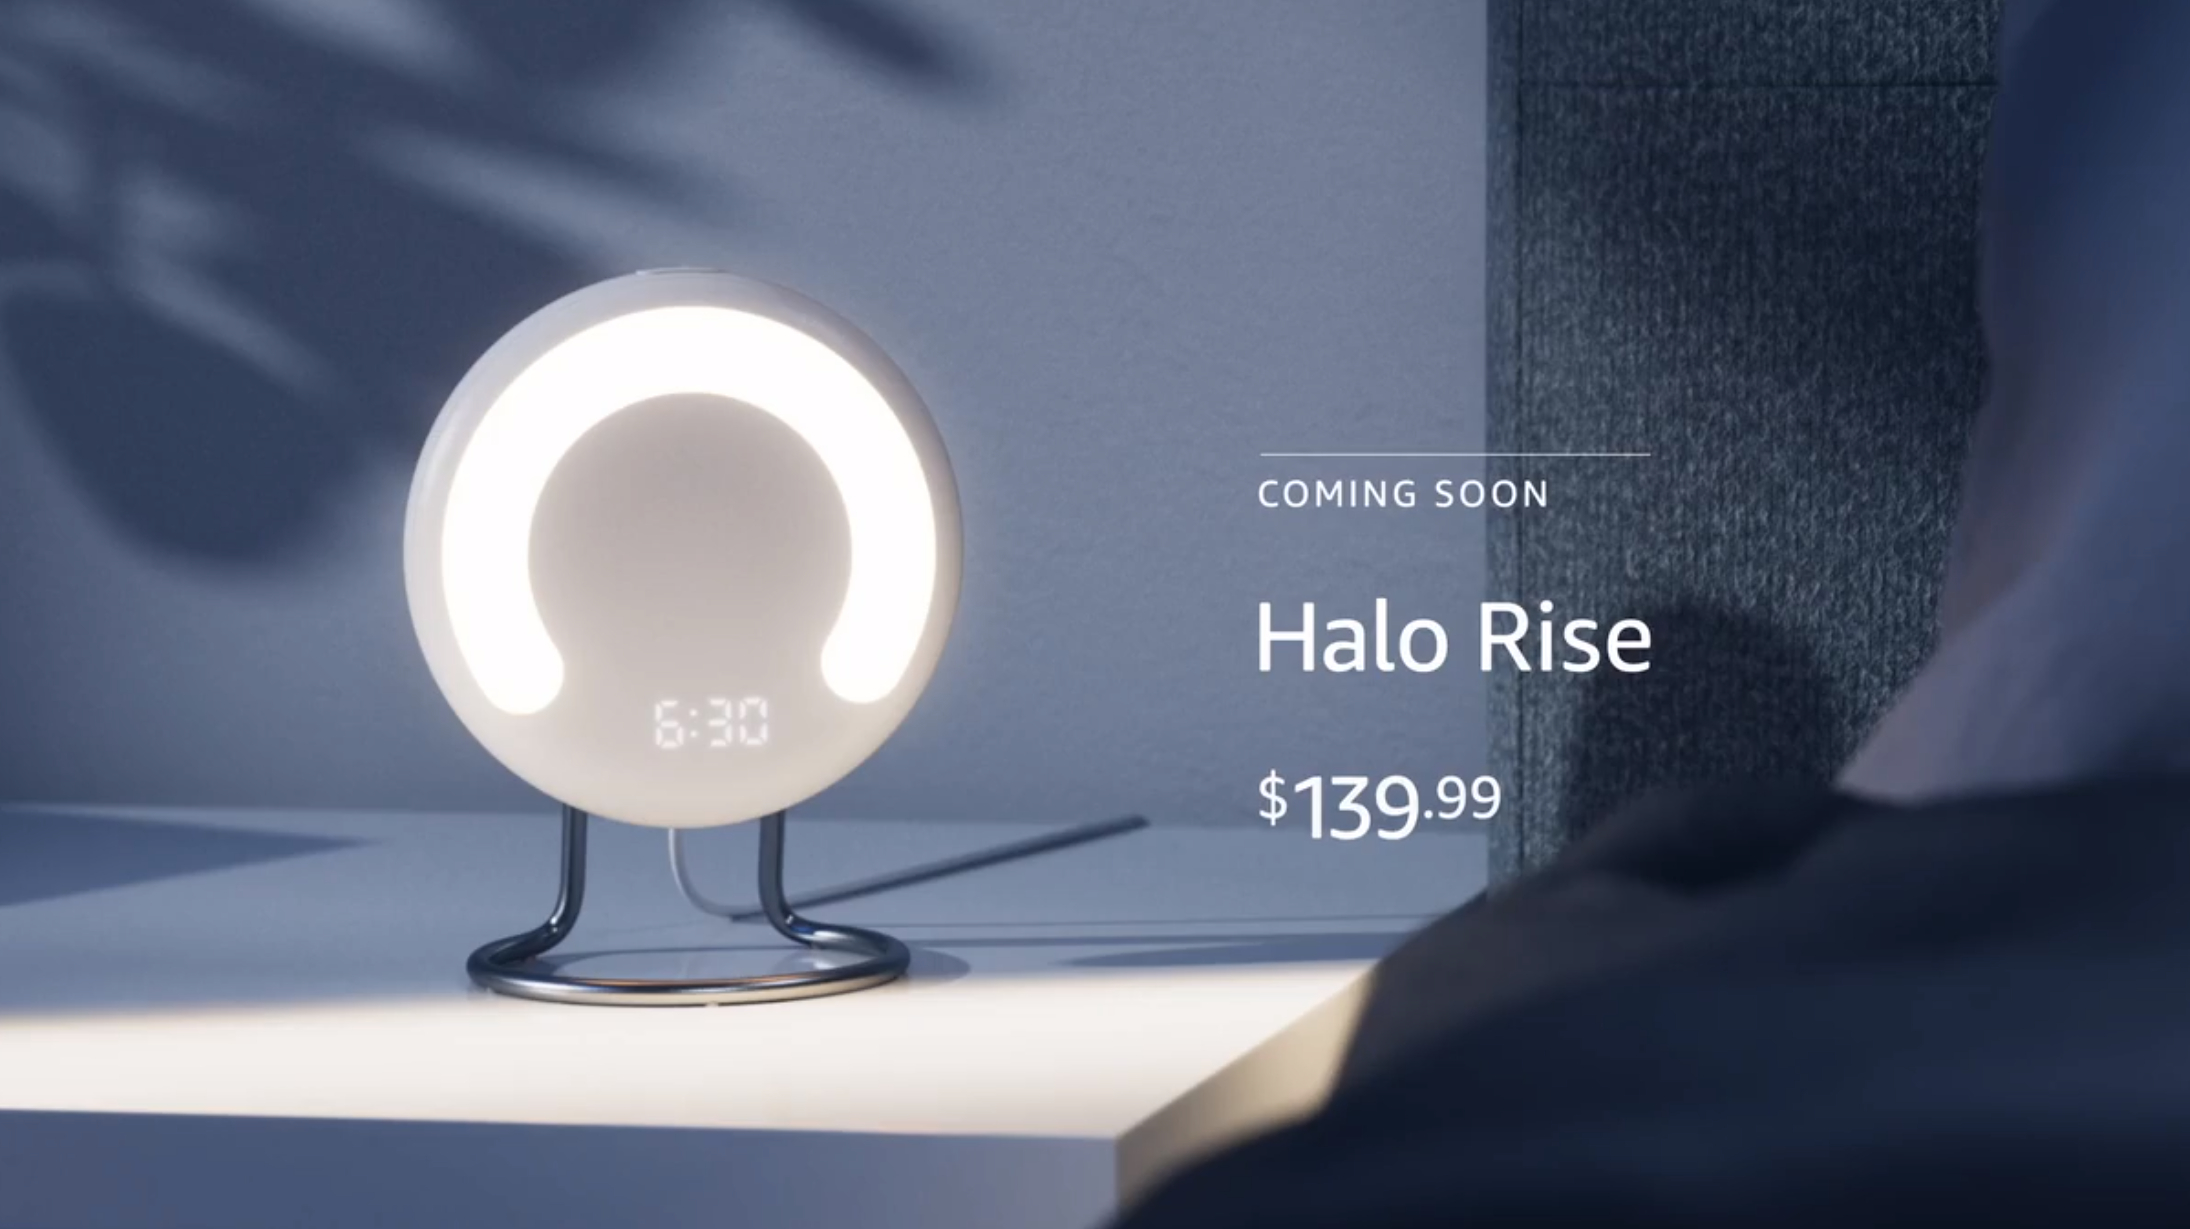 Amazon Halo Rise price